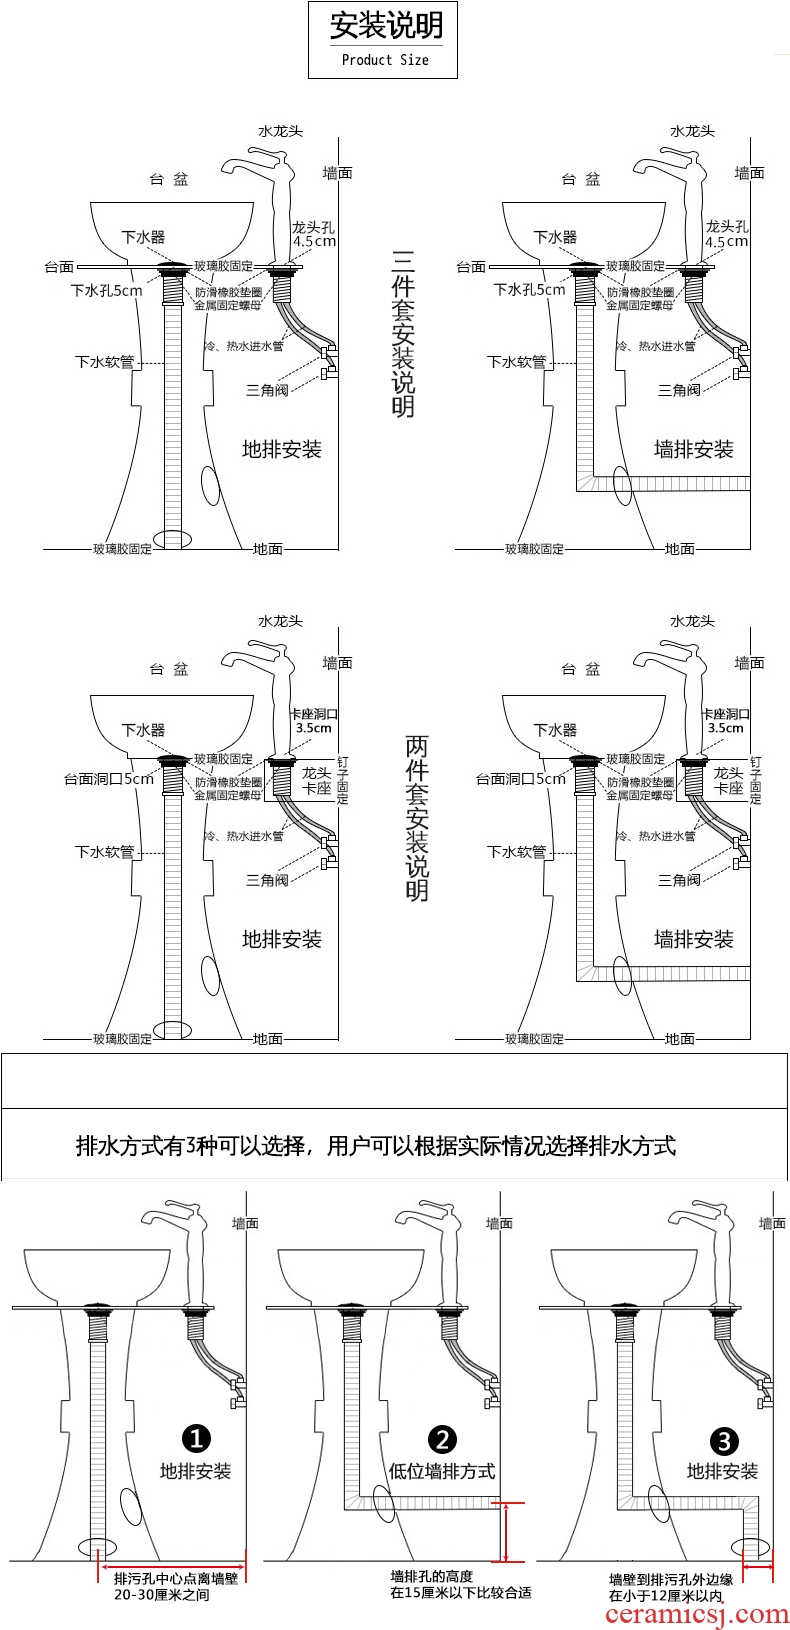 JingWei ceramic lavatory basin vertical integrated sink pillar basin sink outdoor balcony sink